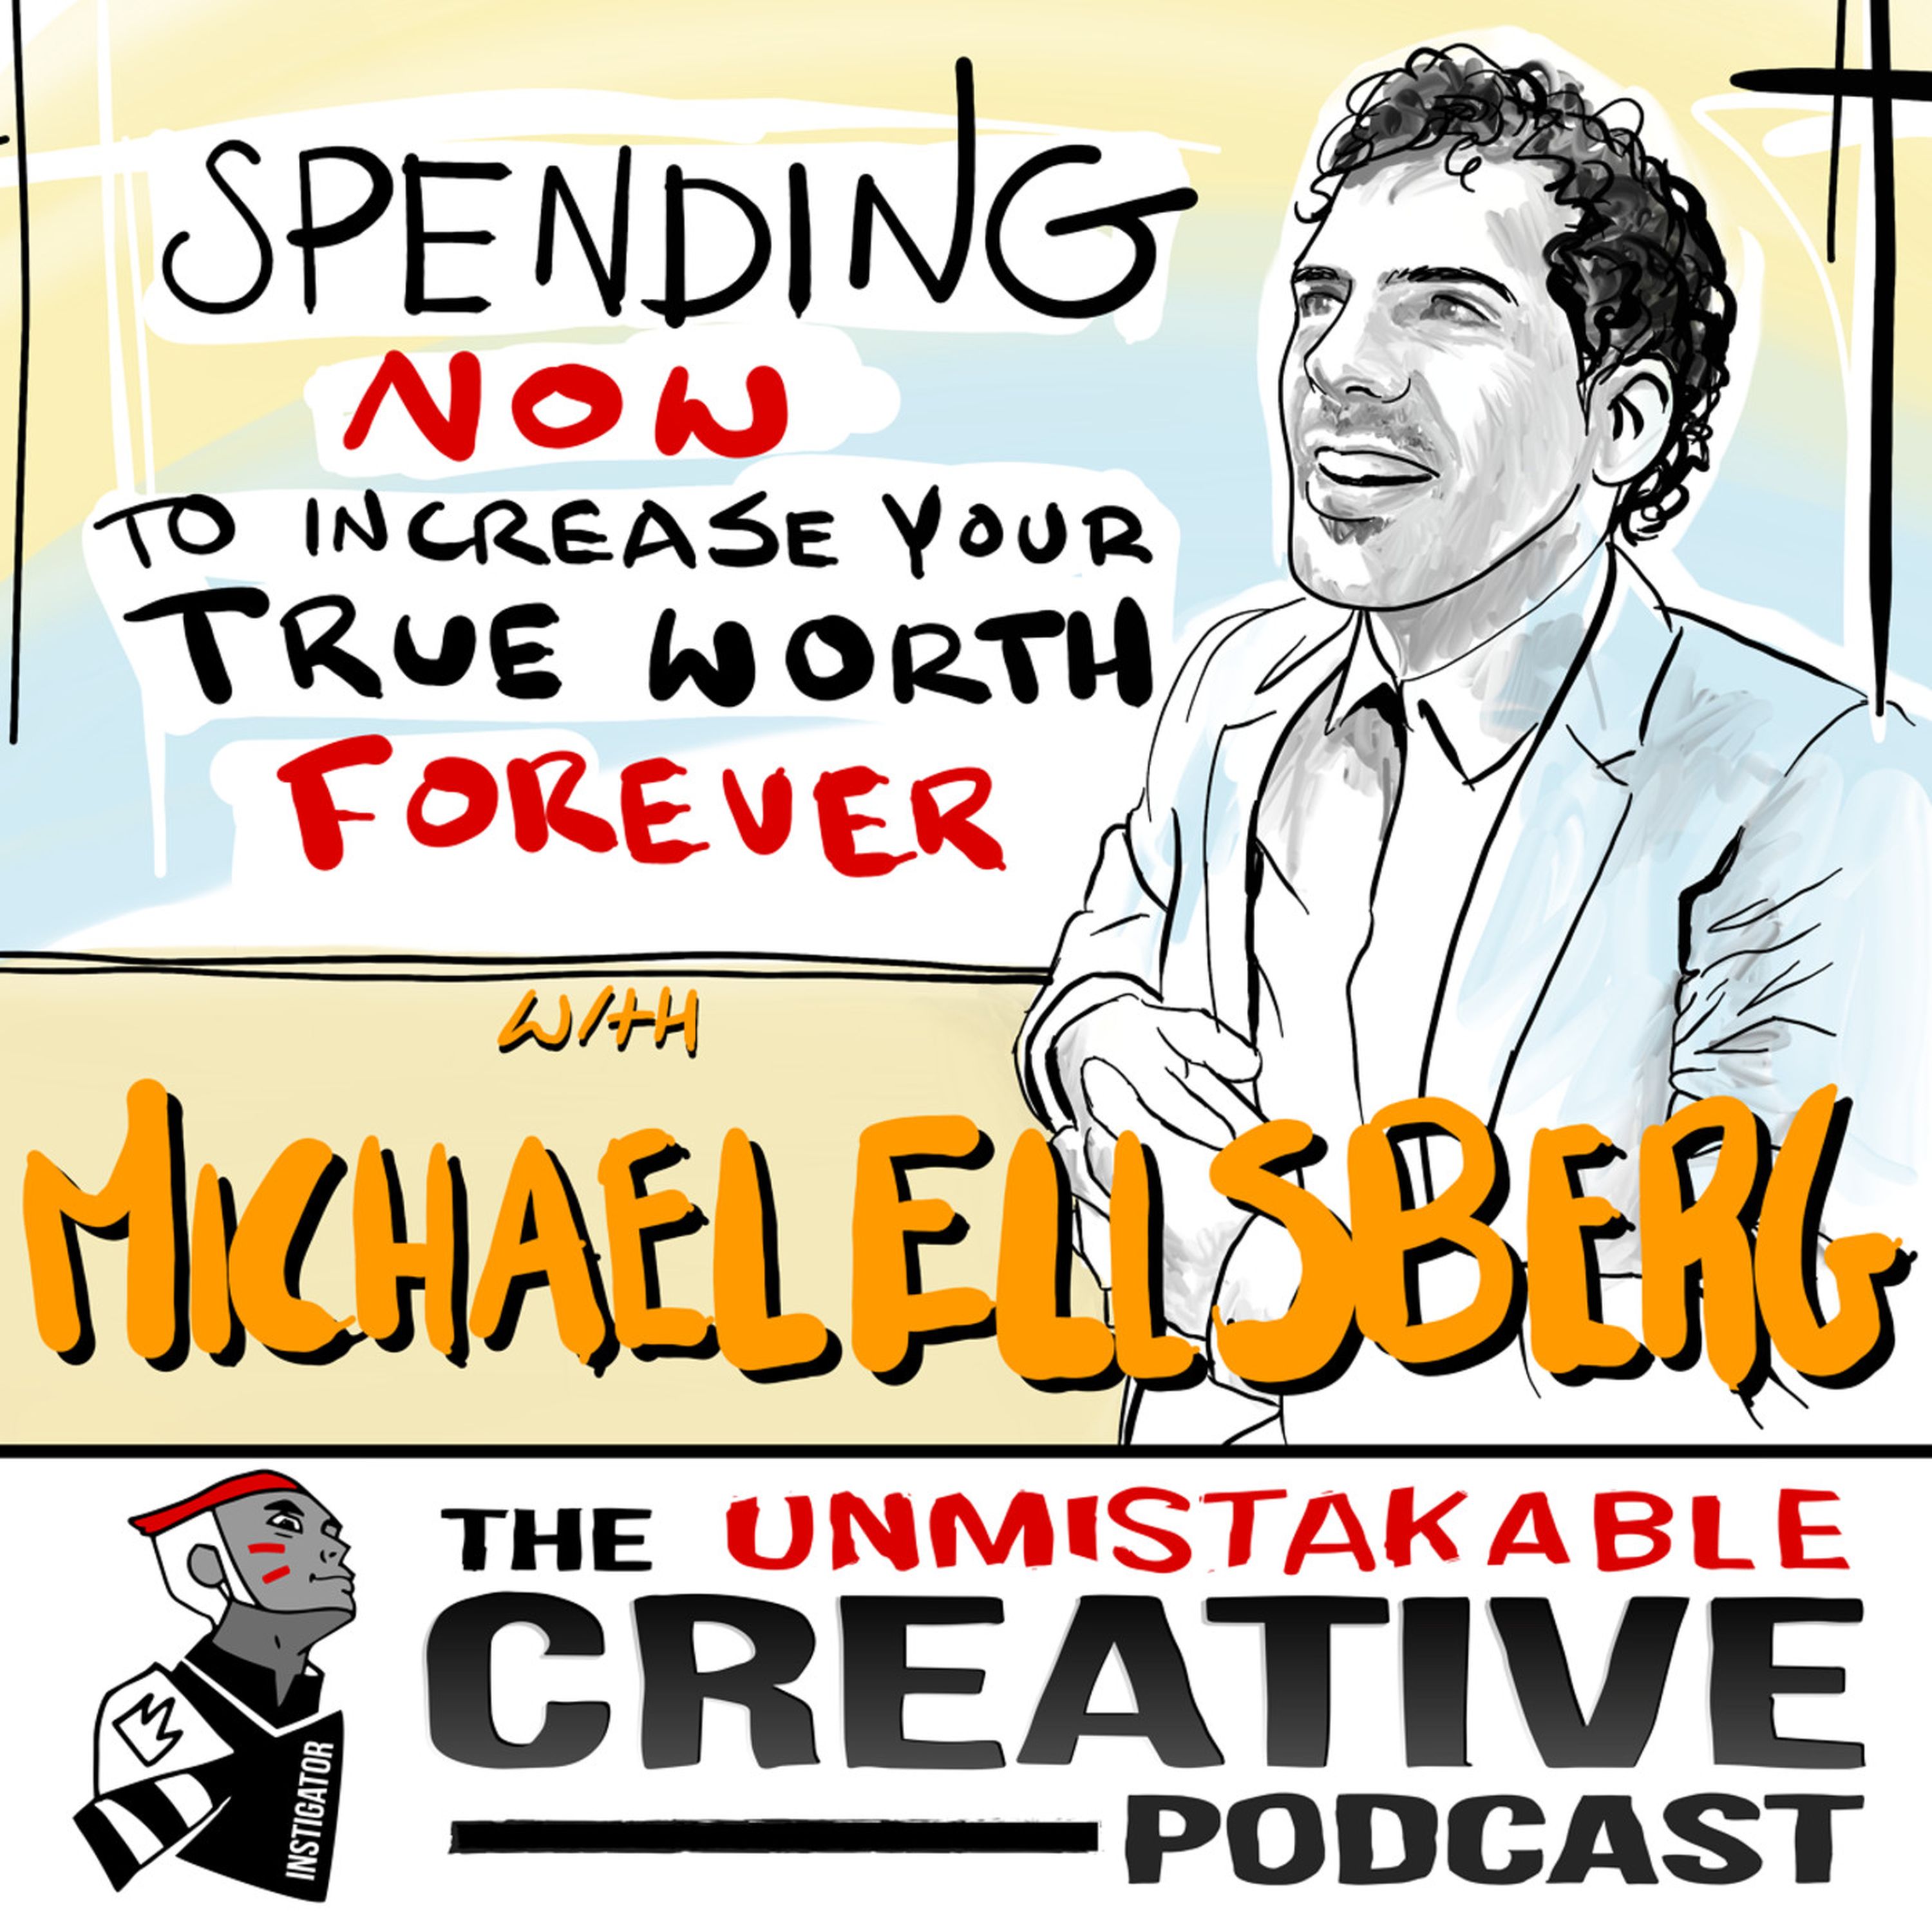 Best of: Michael Ellsberg: Spending Now to Increase Your True Wealth Forever